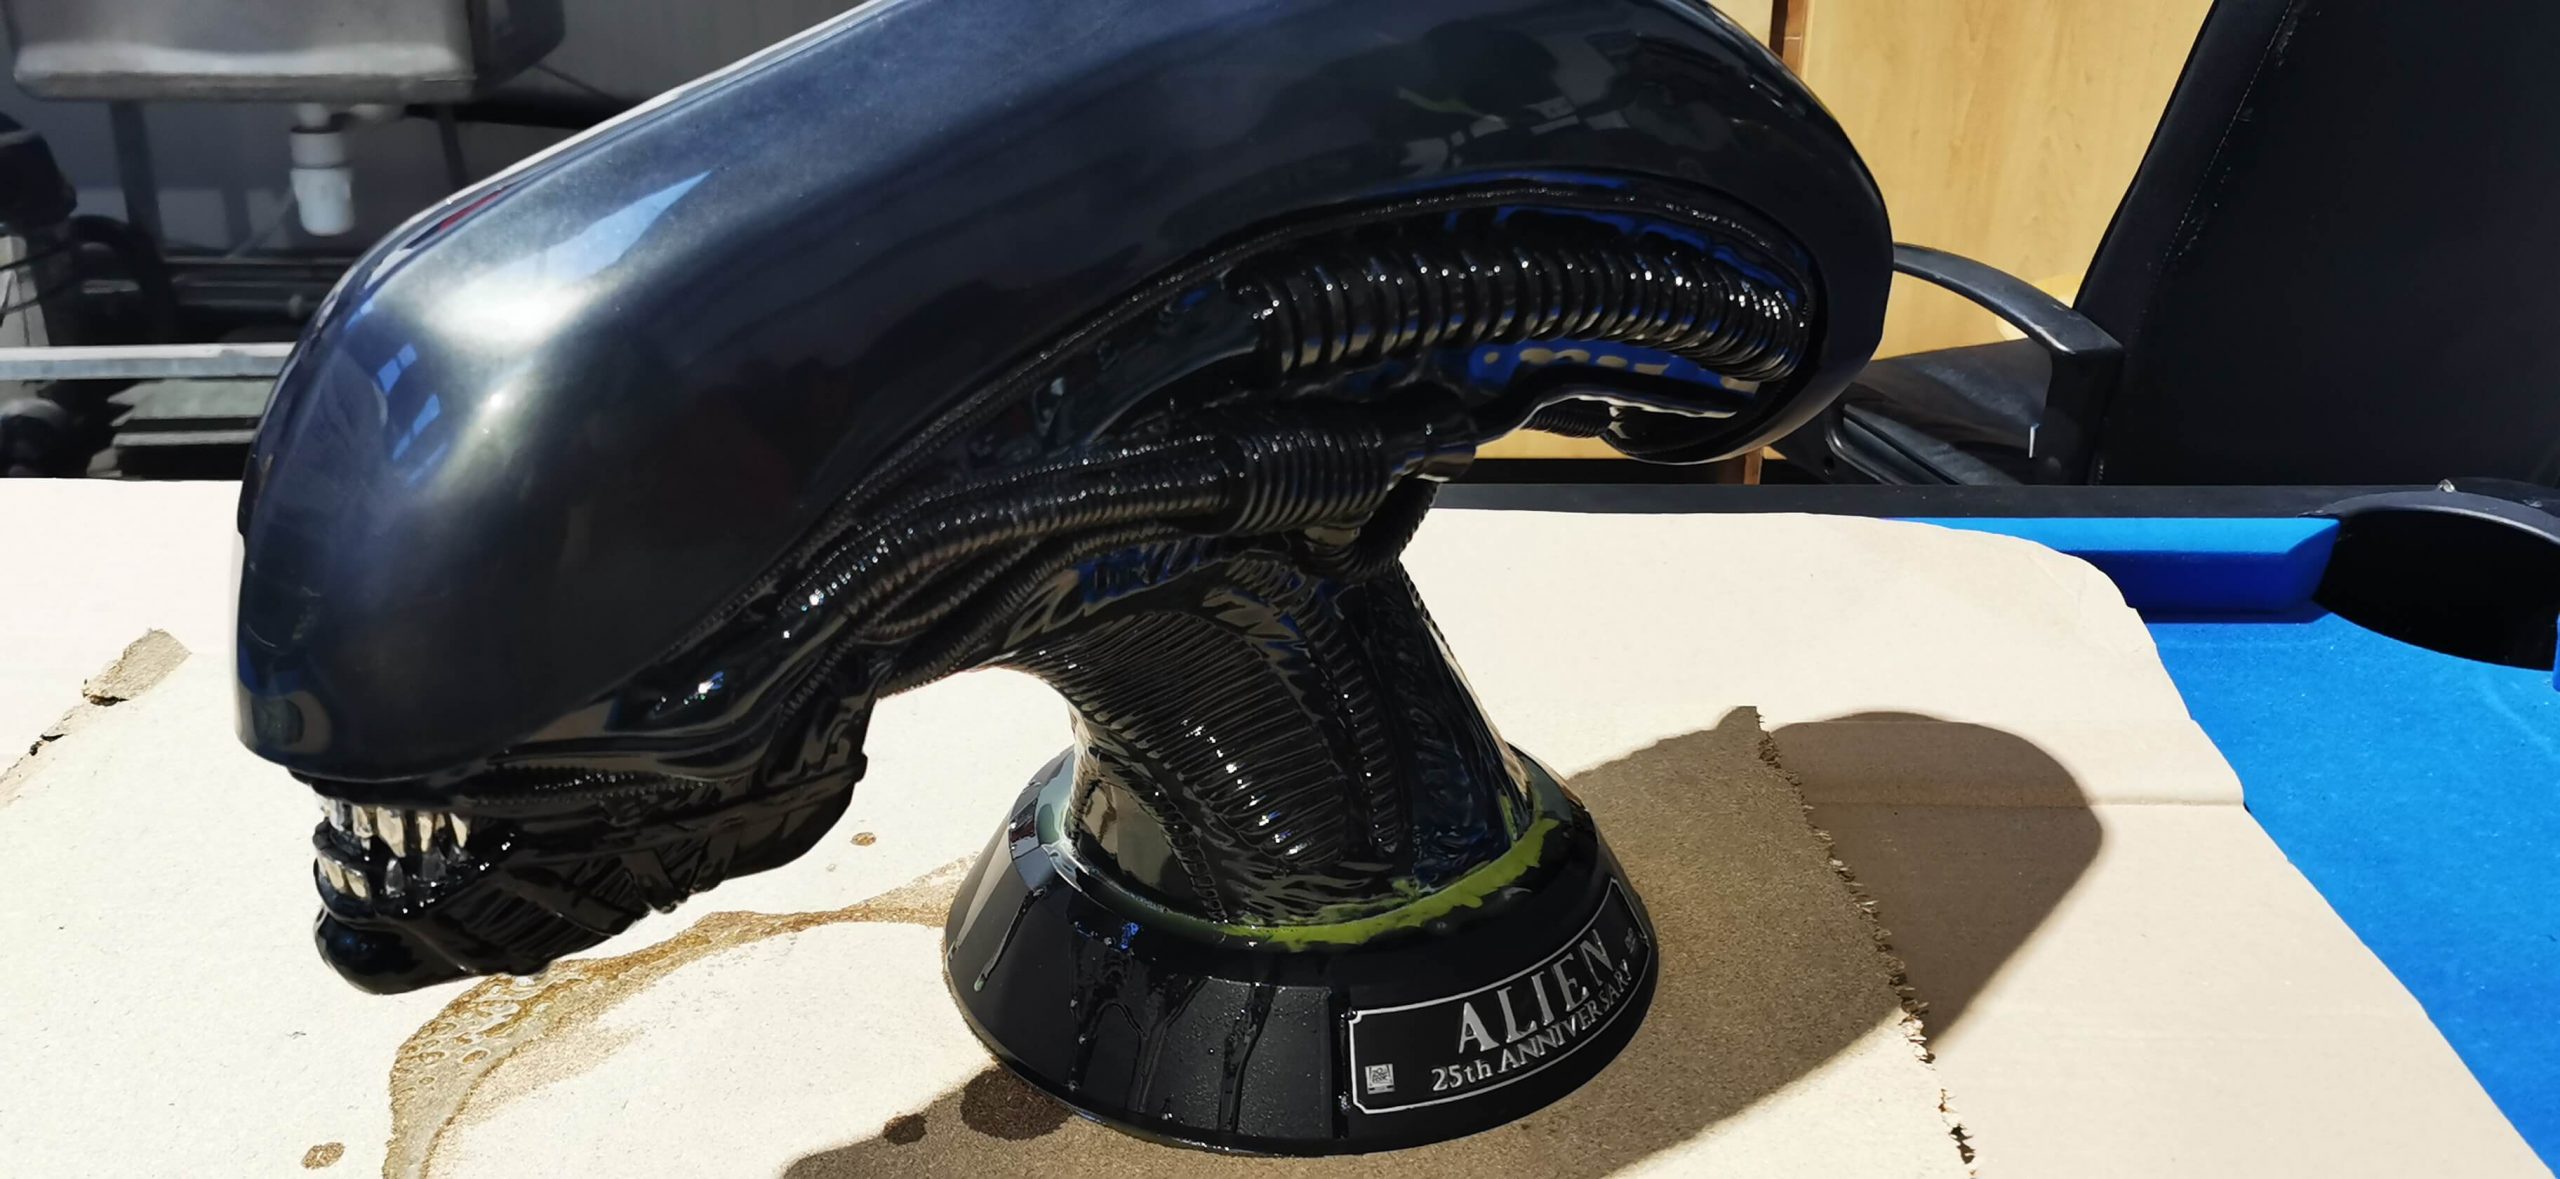 completed alien head